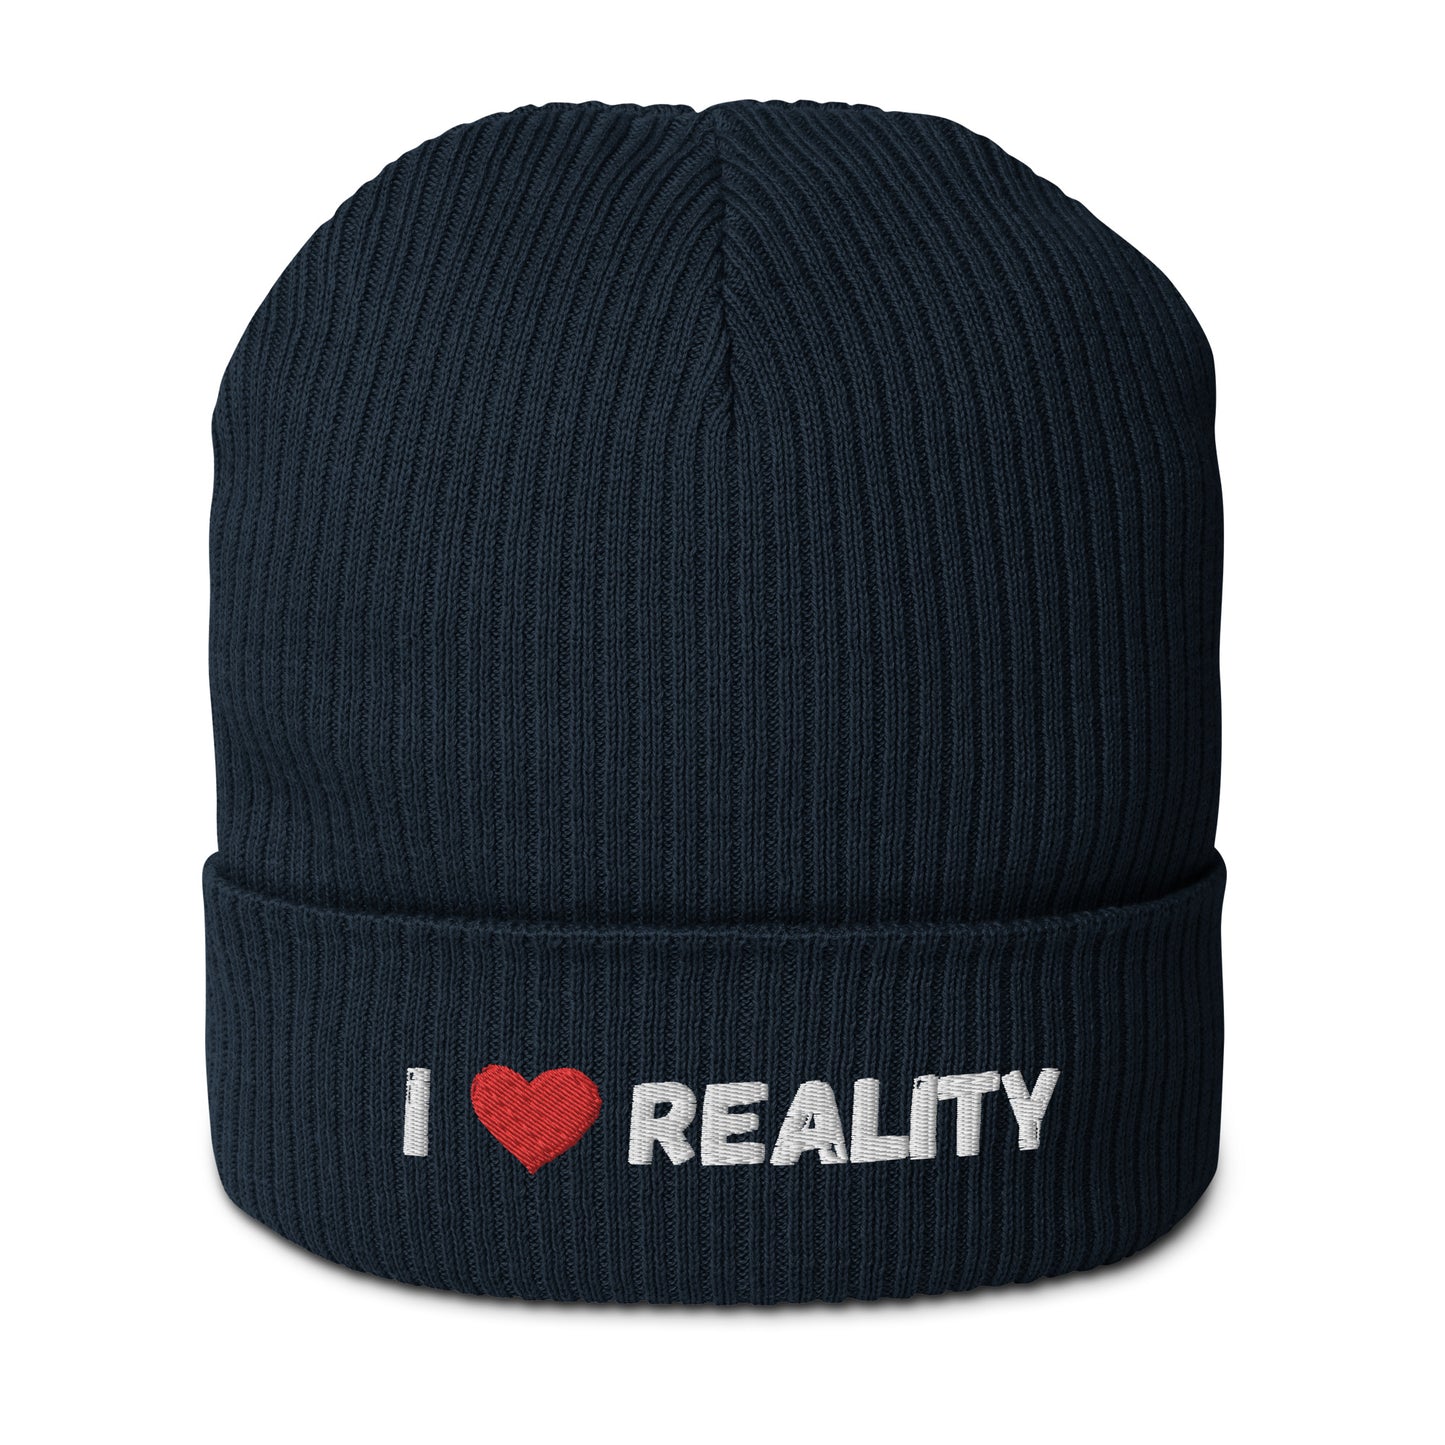 I Love Reality Knit Beanie